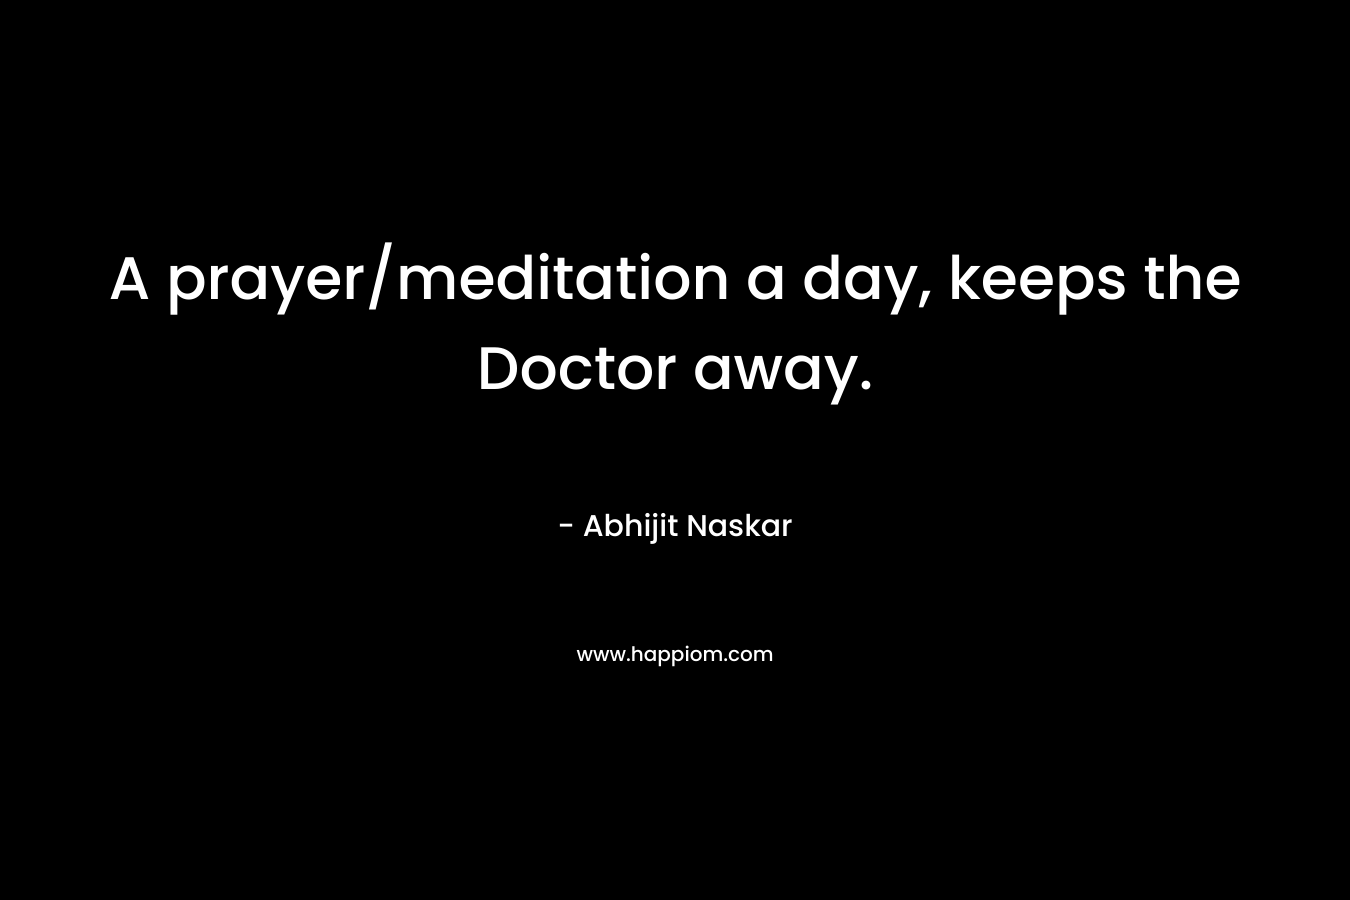 A prayer/meditation a day, keeps the Doctor away.